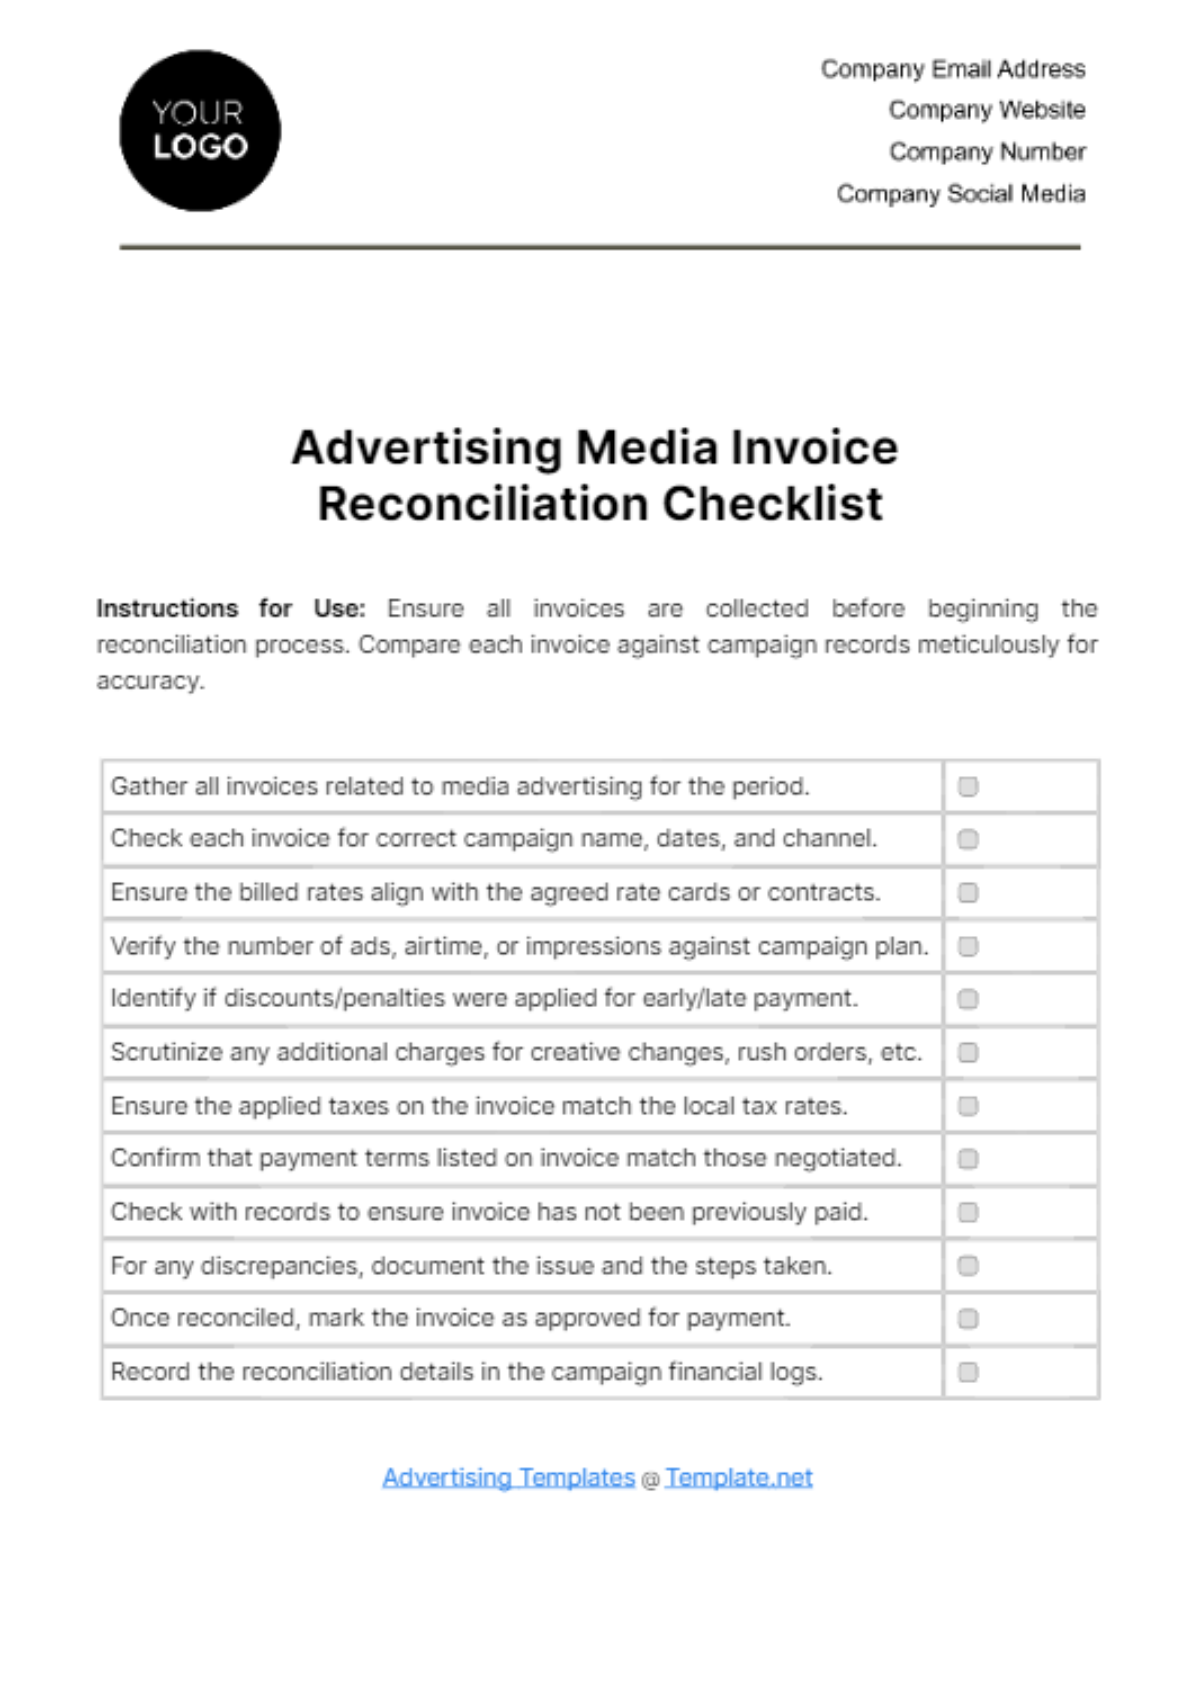 Free Advertising Media Invoice Reconciliation Checklist Template